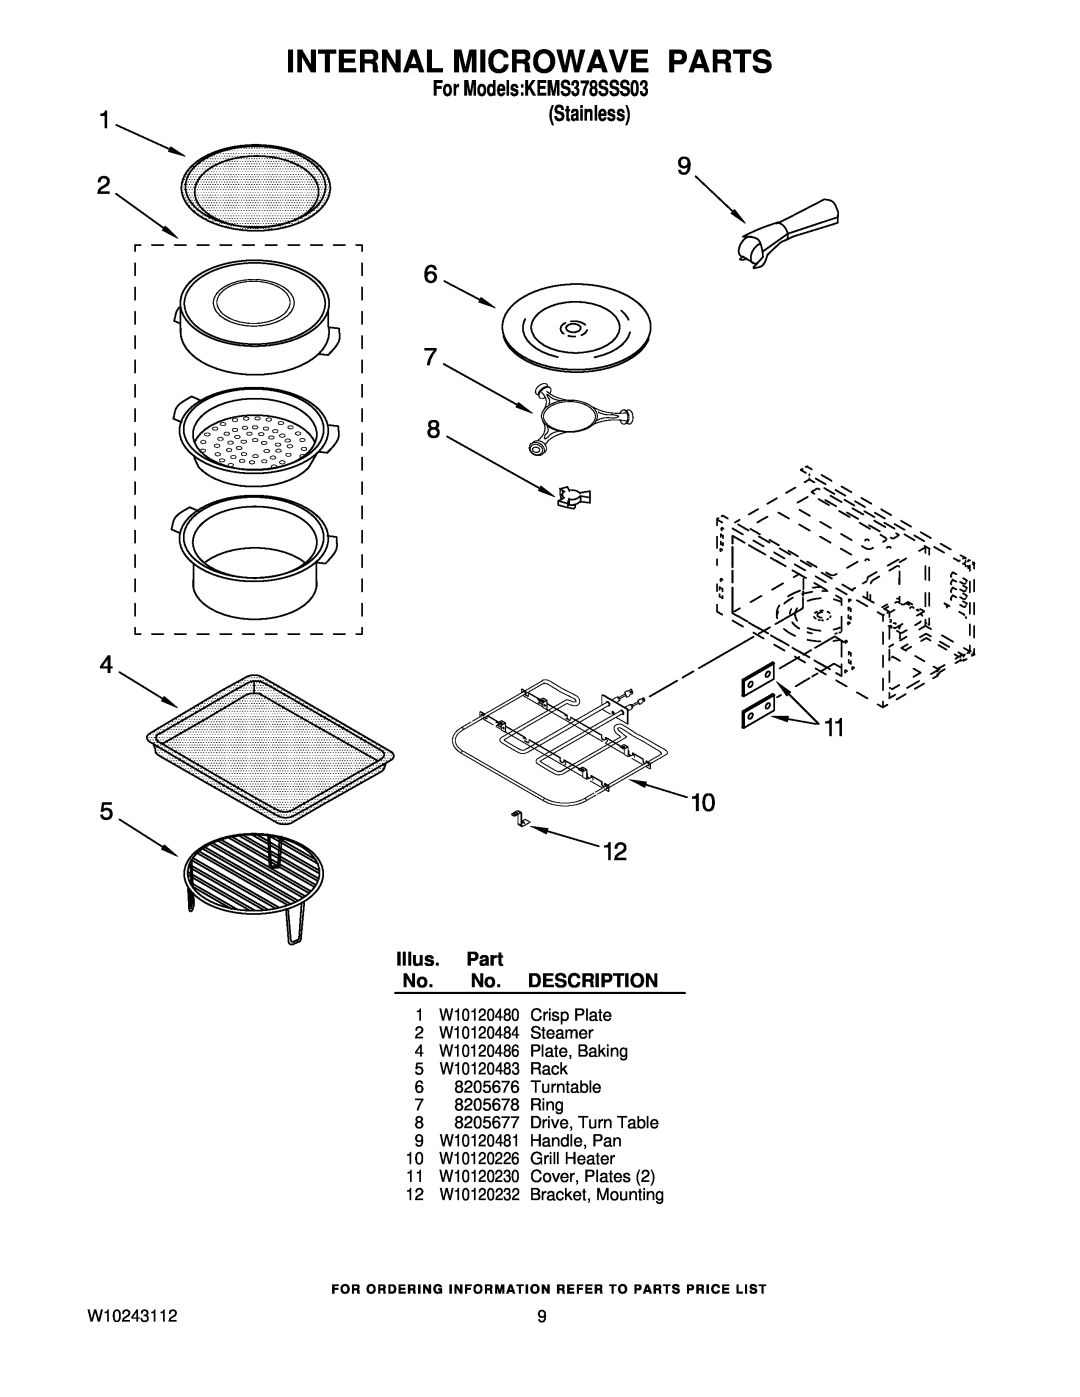 KitchenAid manual Internal Microwave Parts, Illus. Part No. No. DESCRIPTION, For ModelsKEMS378SSS03 Stainless 